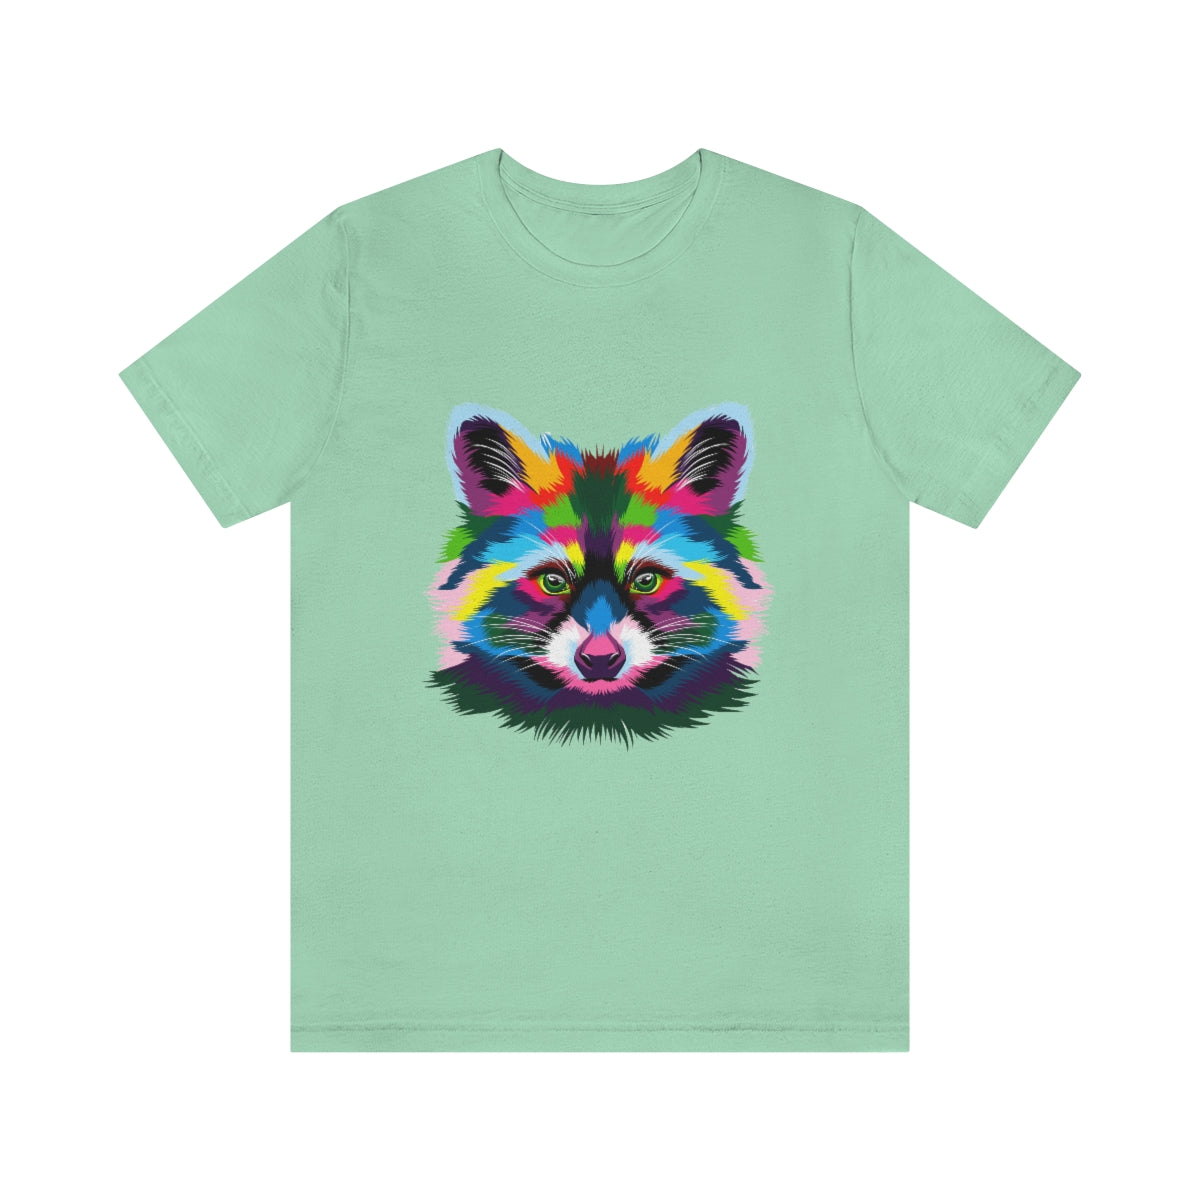 Unisex Jersey Short Sleeve Tee "Abstract colorful raccoon"